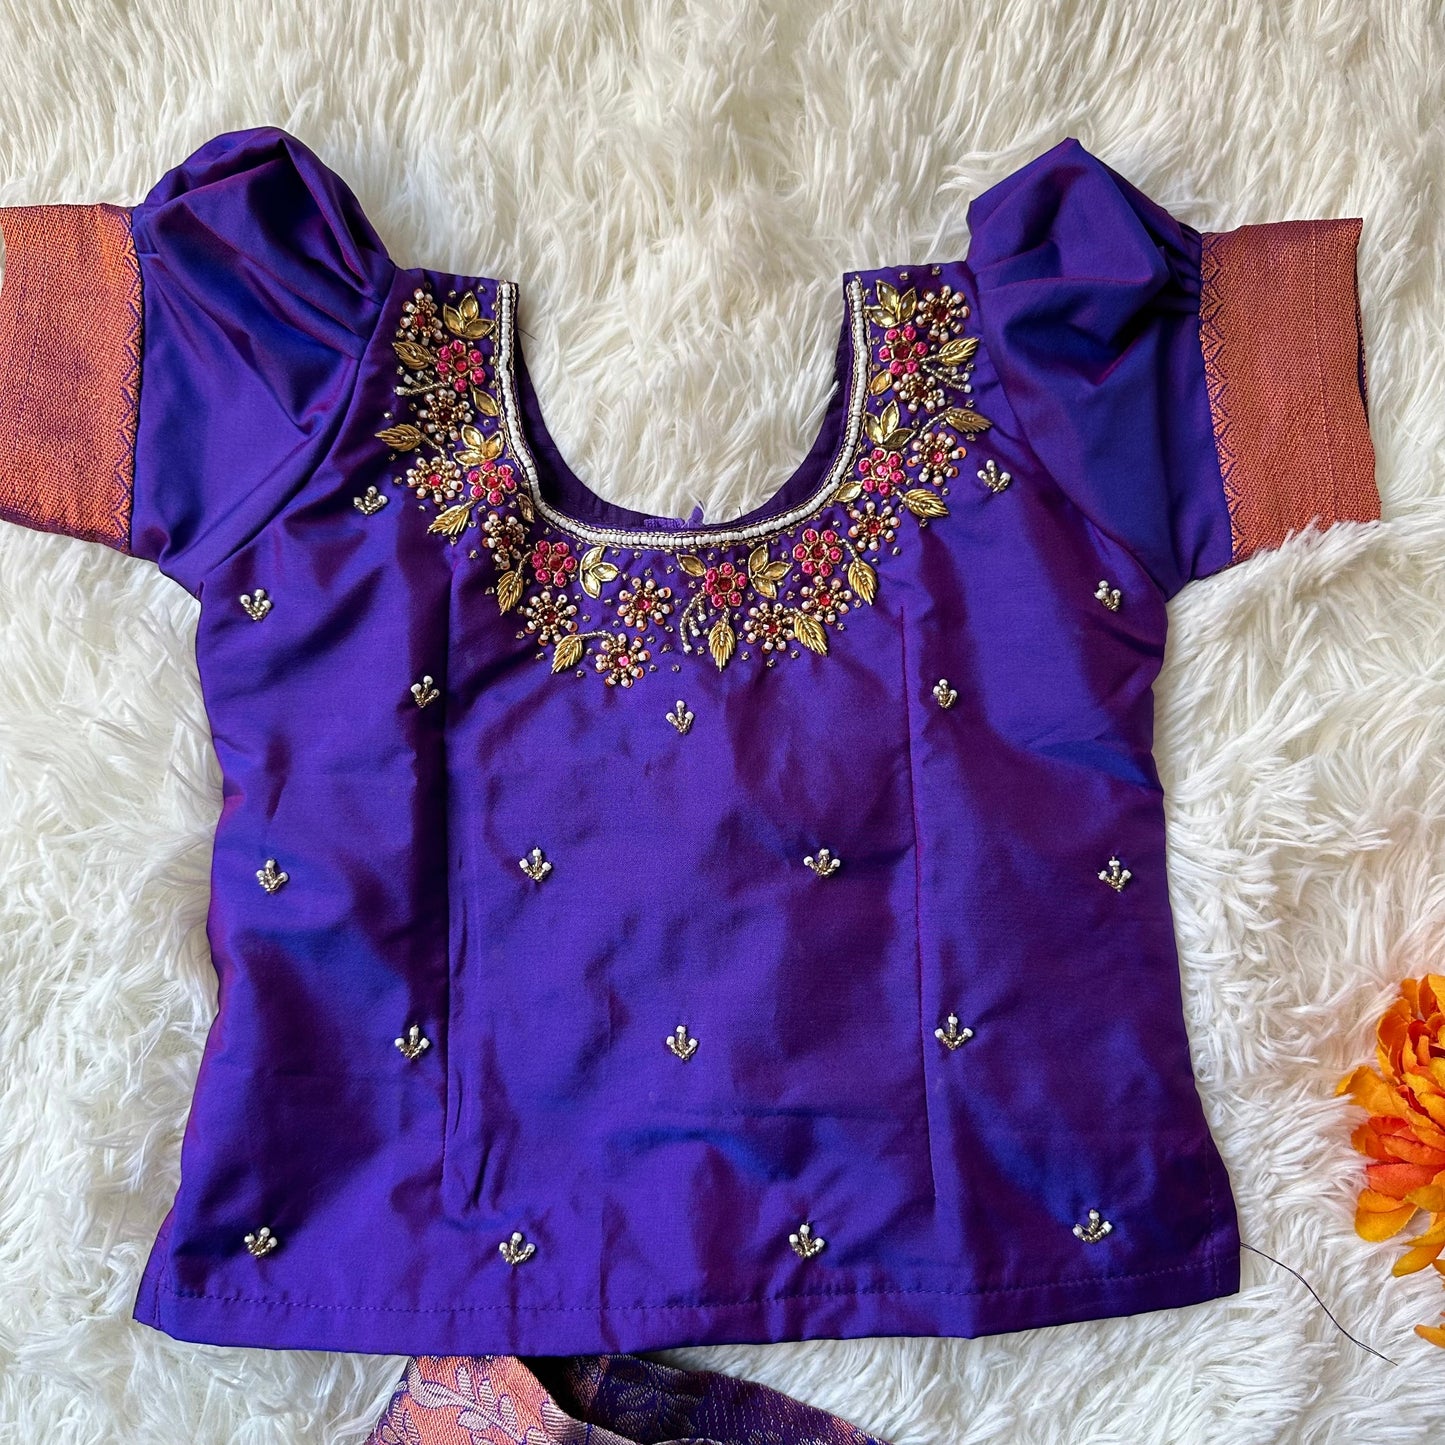 Dazzling Violet: Silver Zari Skirt and Aari Work Top in Luxurious Semi-Silk